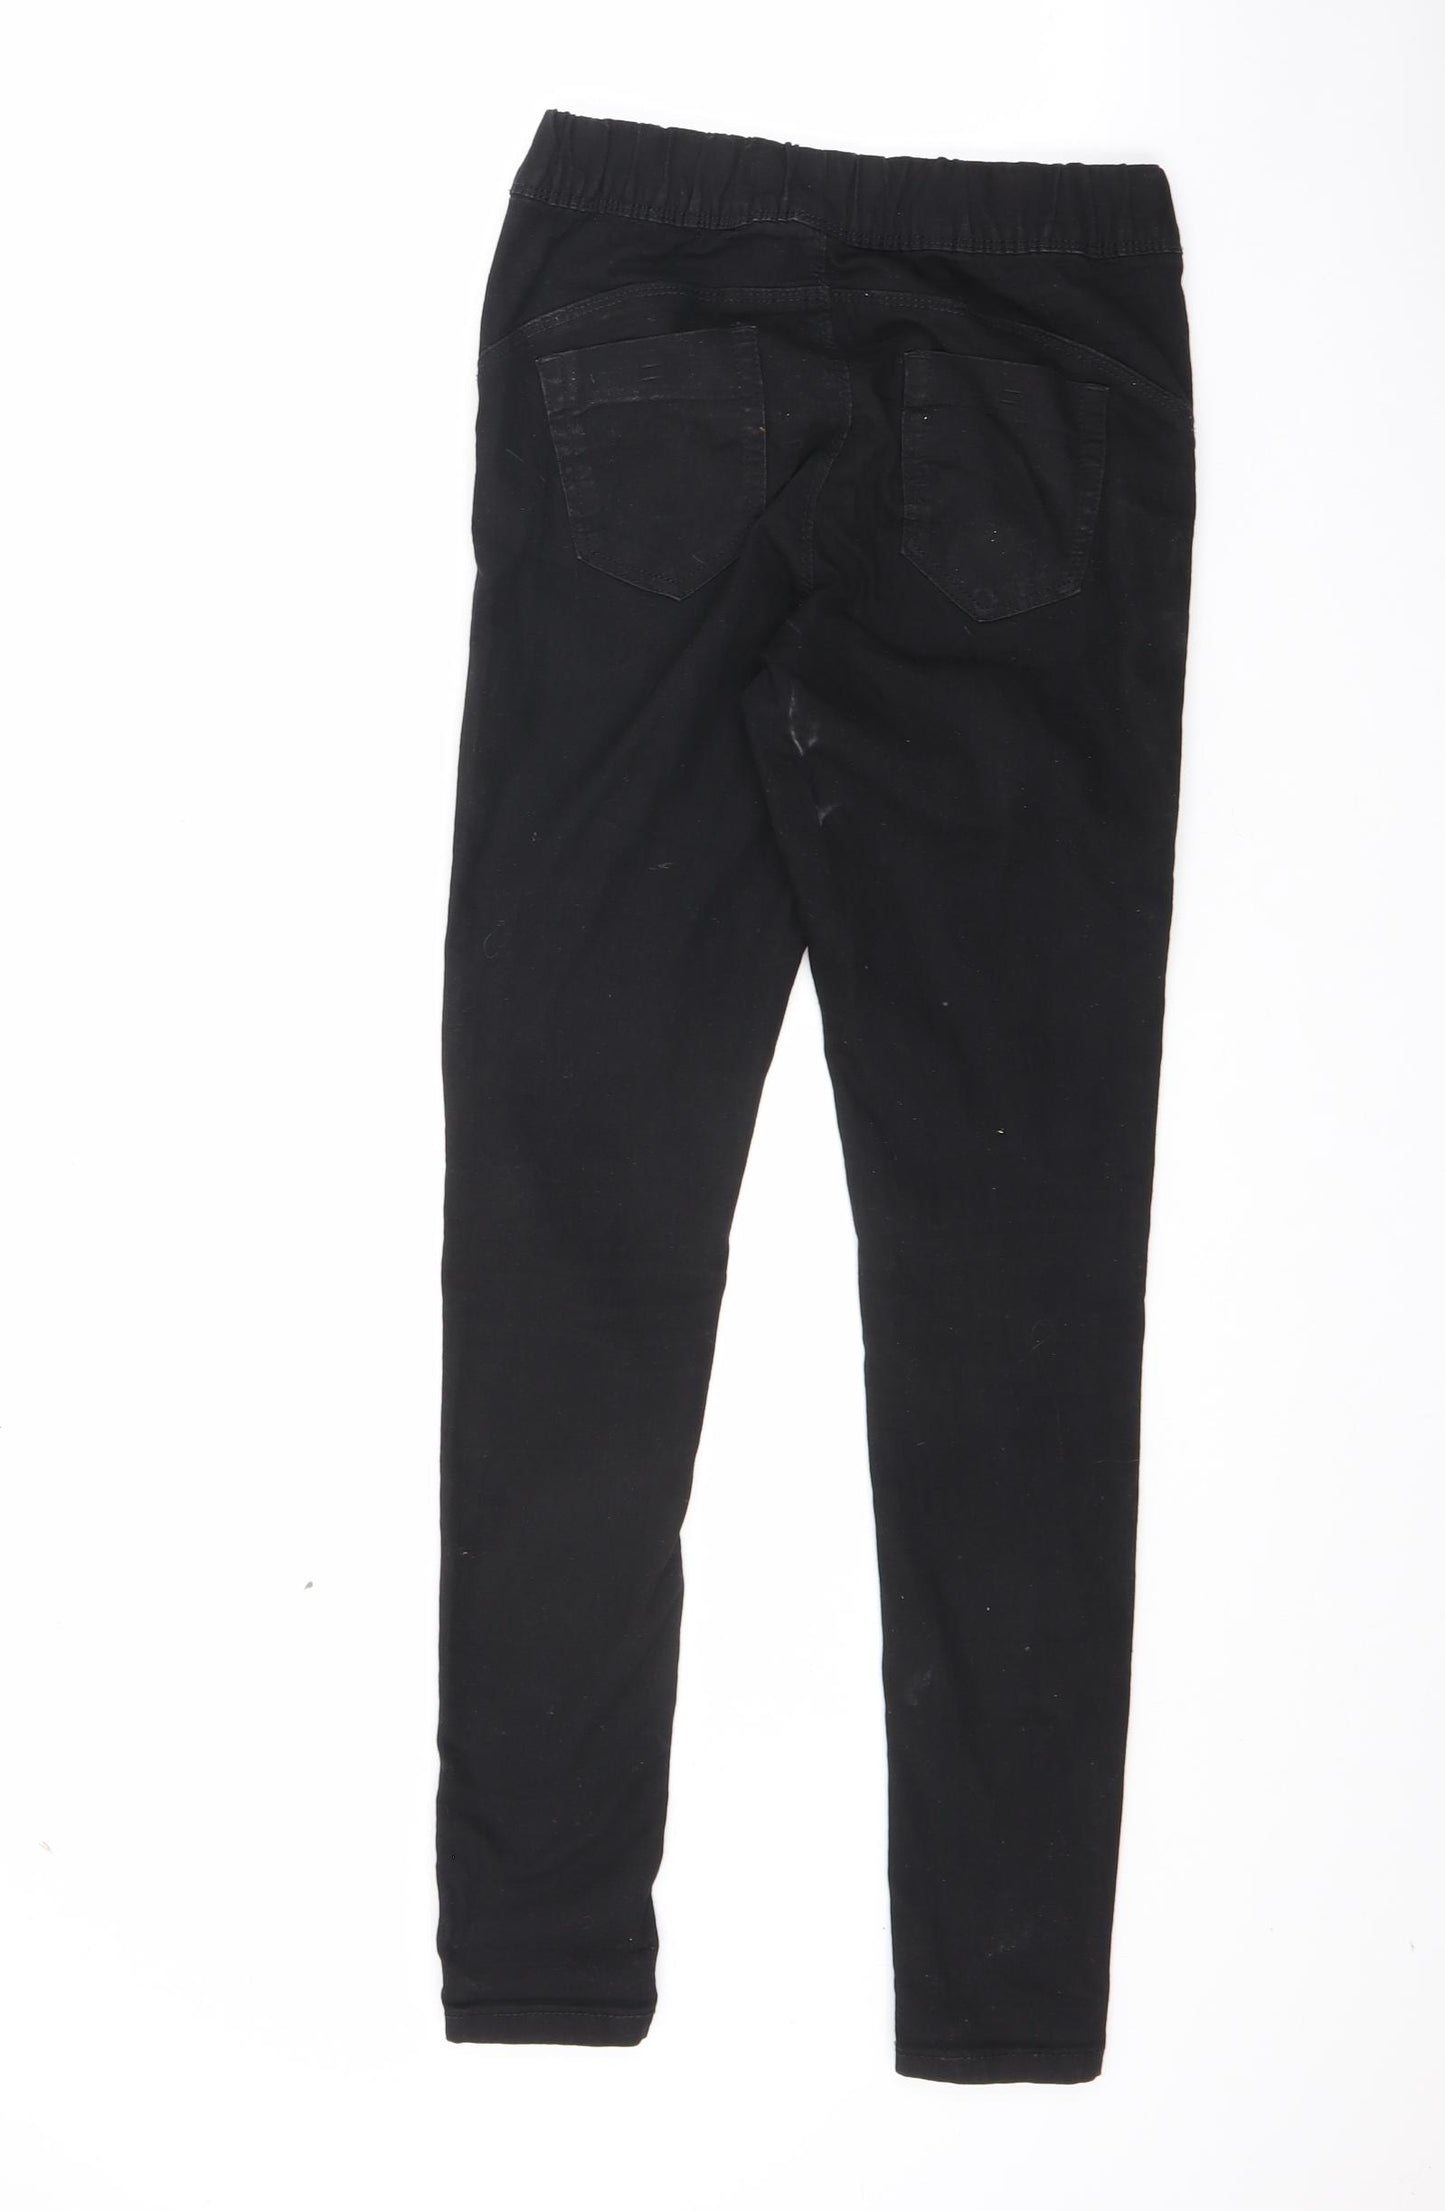 Denim & Co. Womens Black Cotton Jegging Jeans Size 8 L29 in Regular